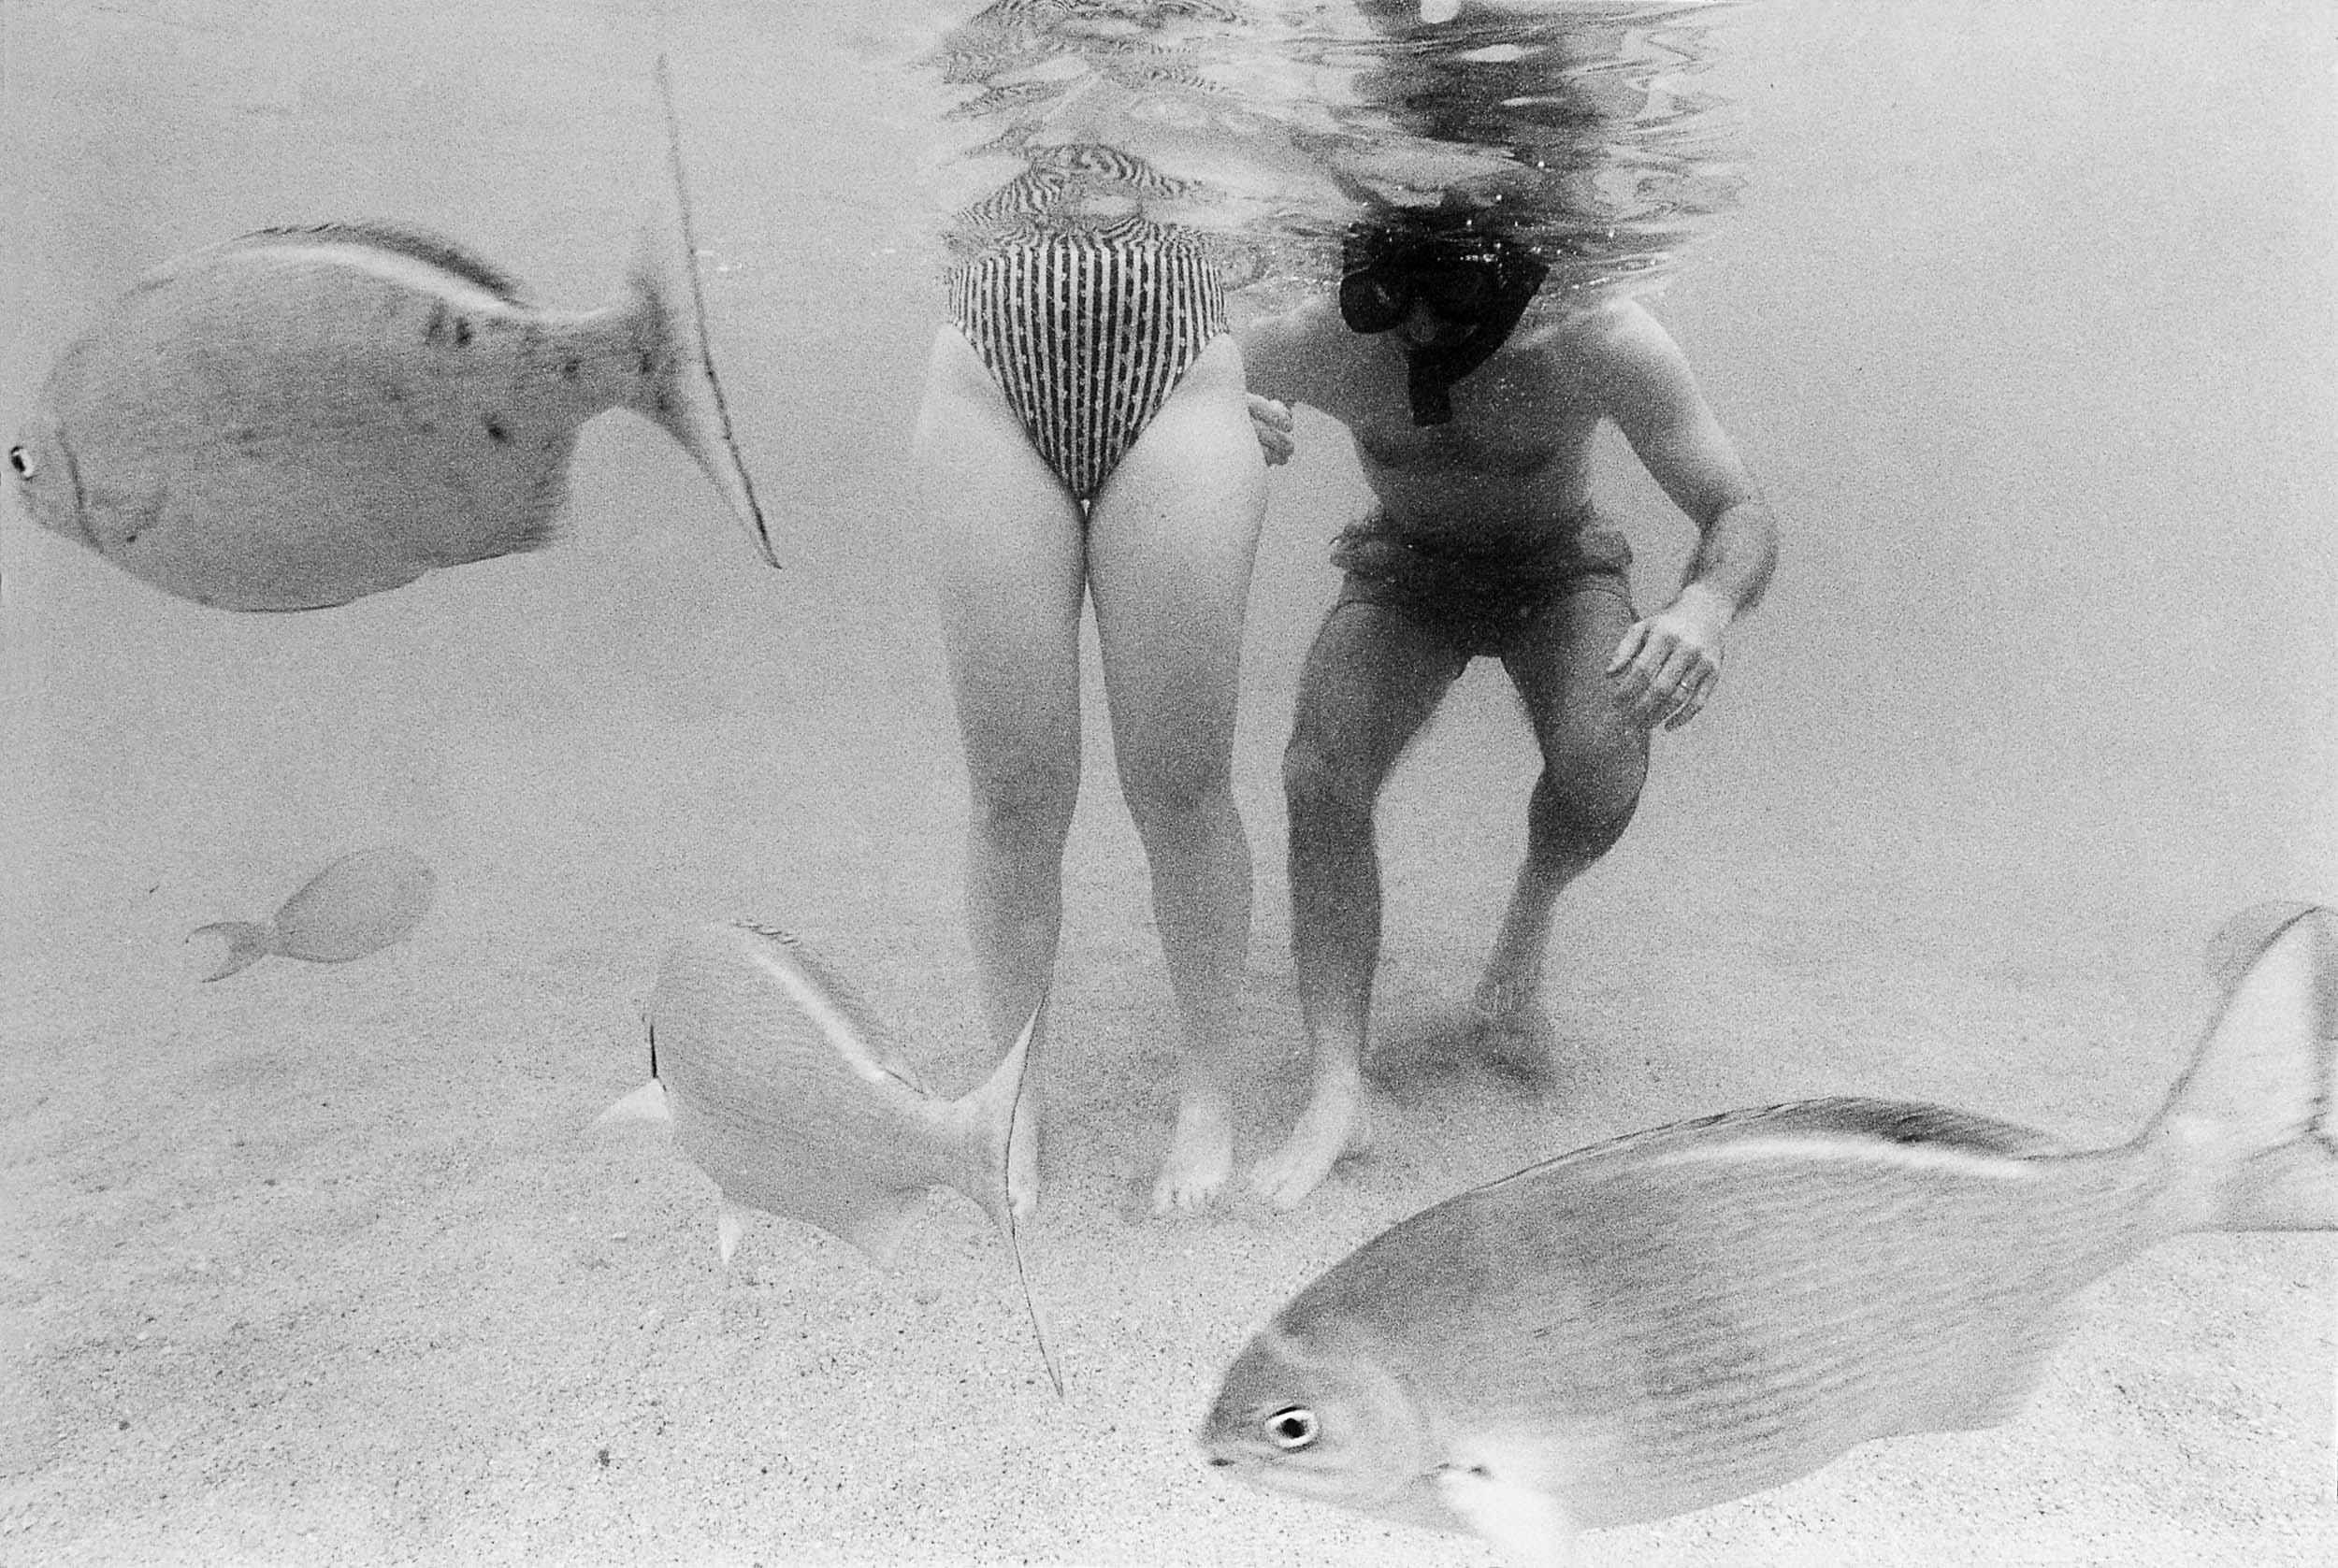 Barbara Alper- Photo of fish swimming around people at Hanauma Bay, Oahu Hawaii